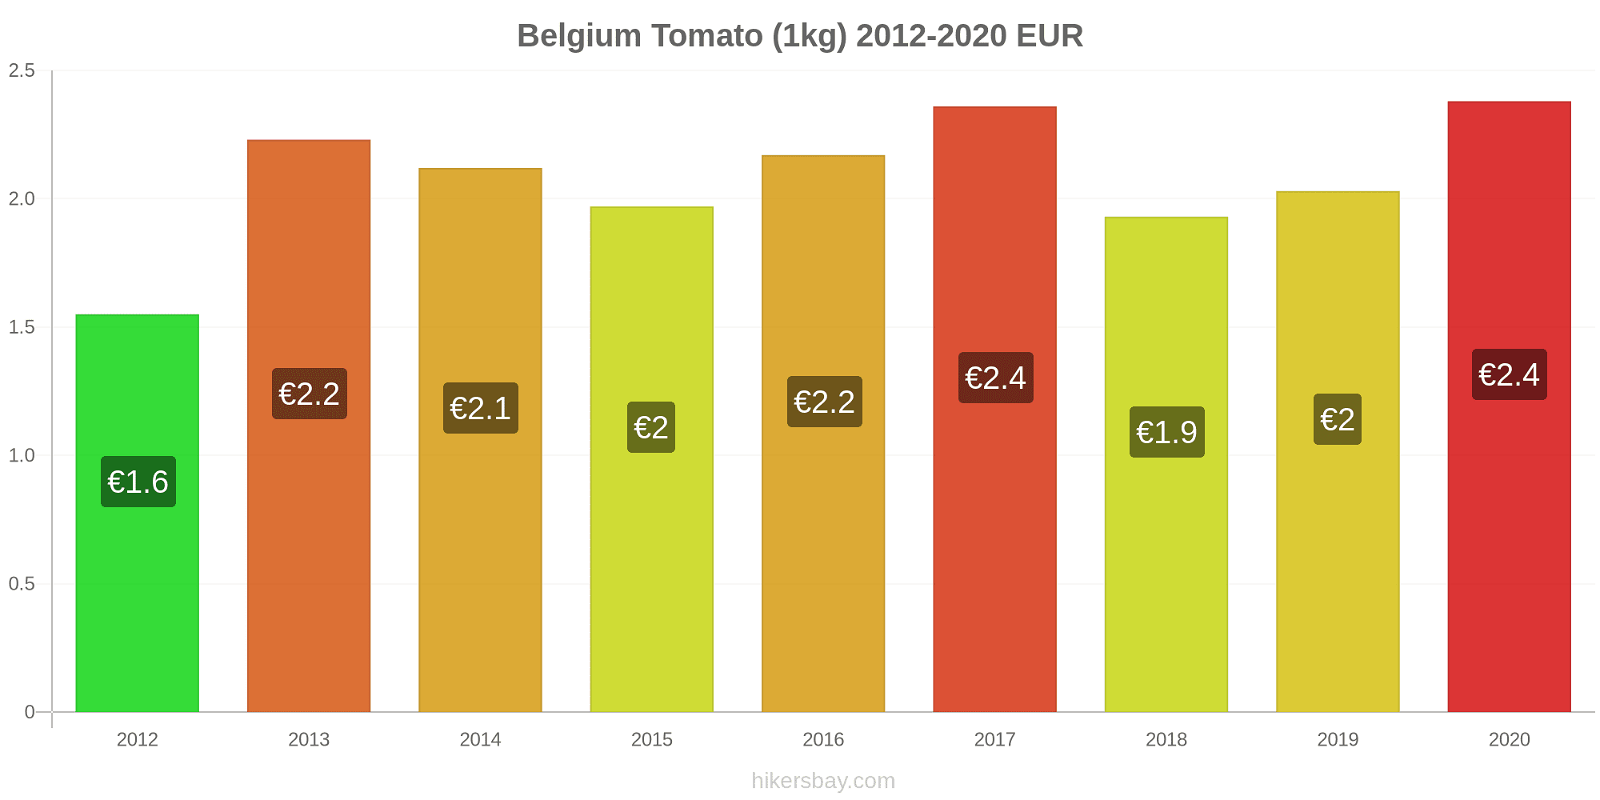 Belgium price changes Tomato (1kg) hikersbay.com